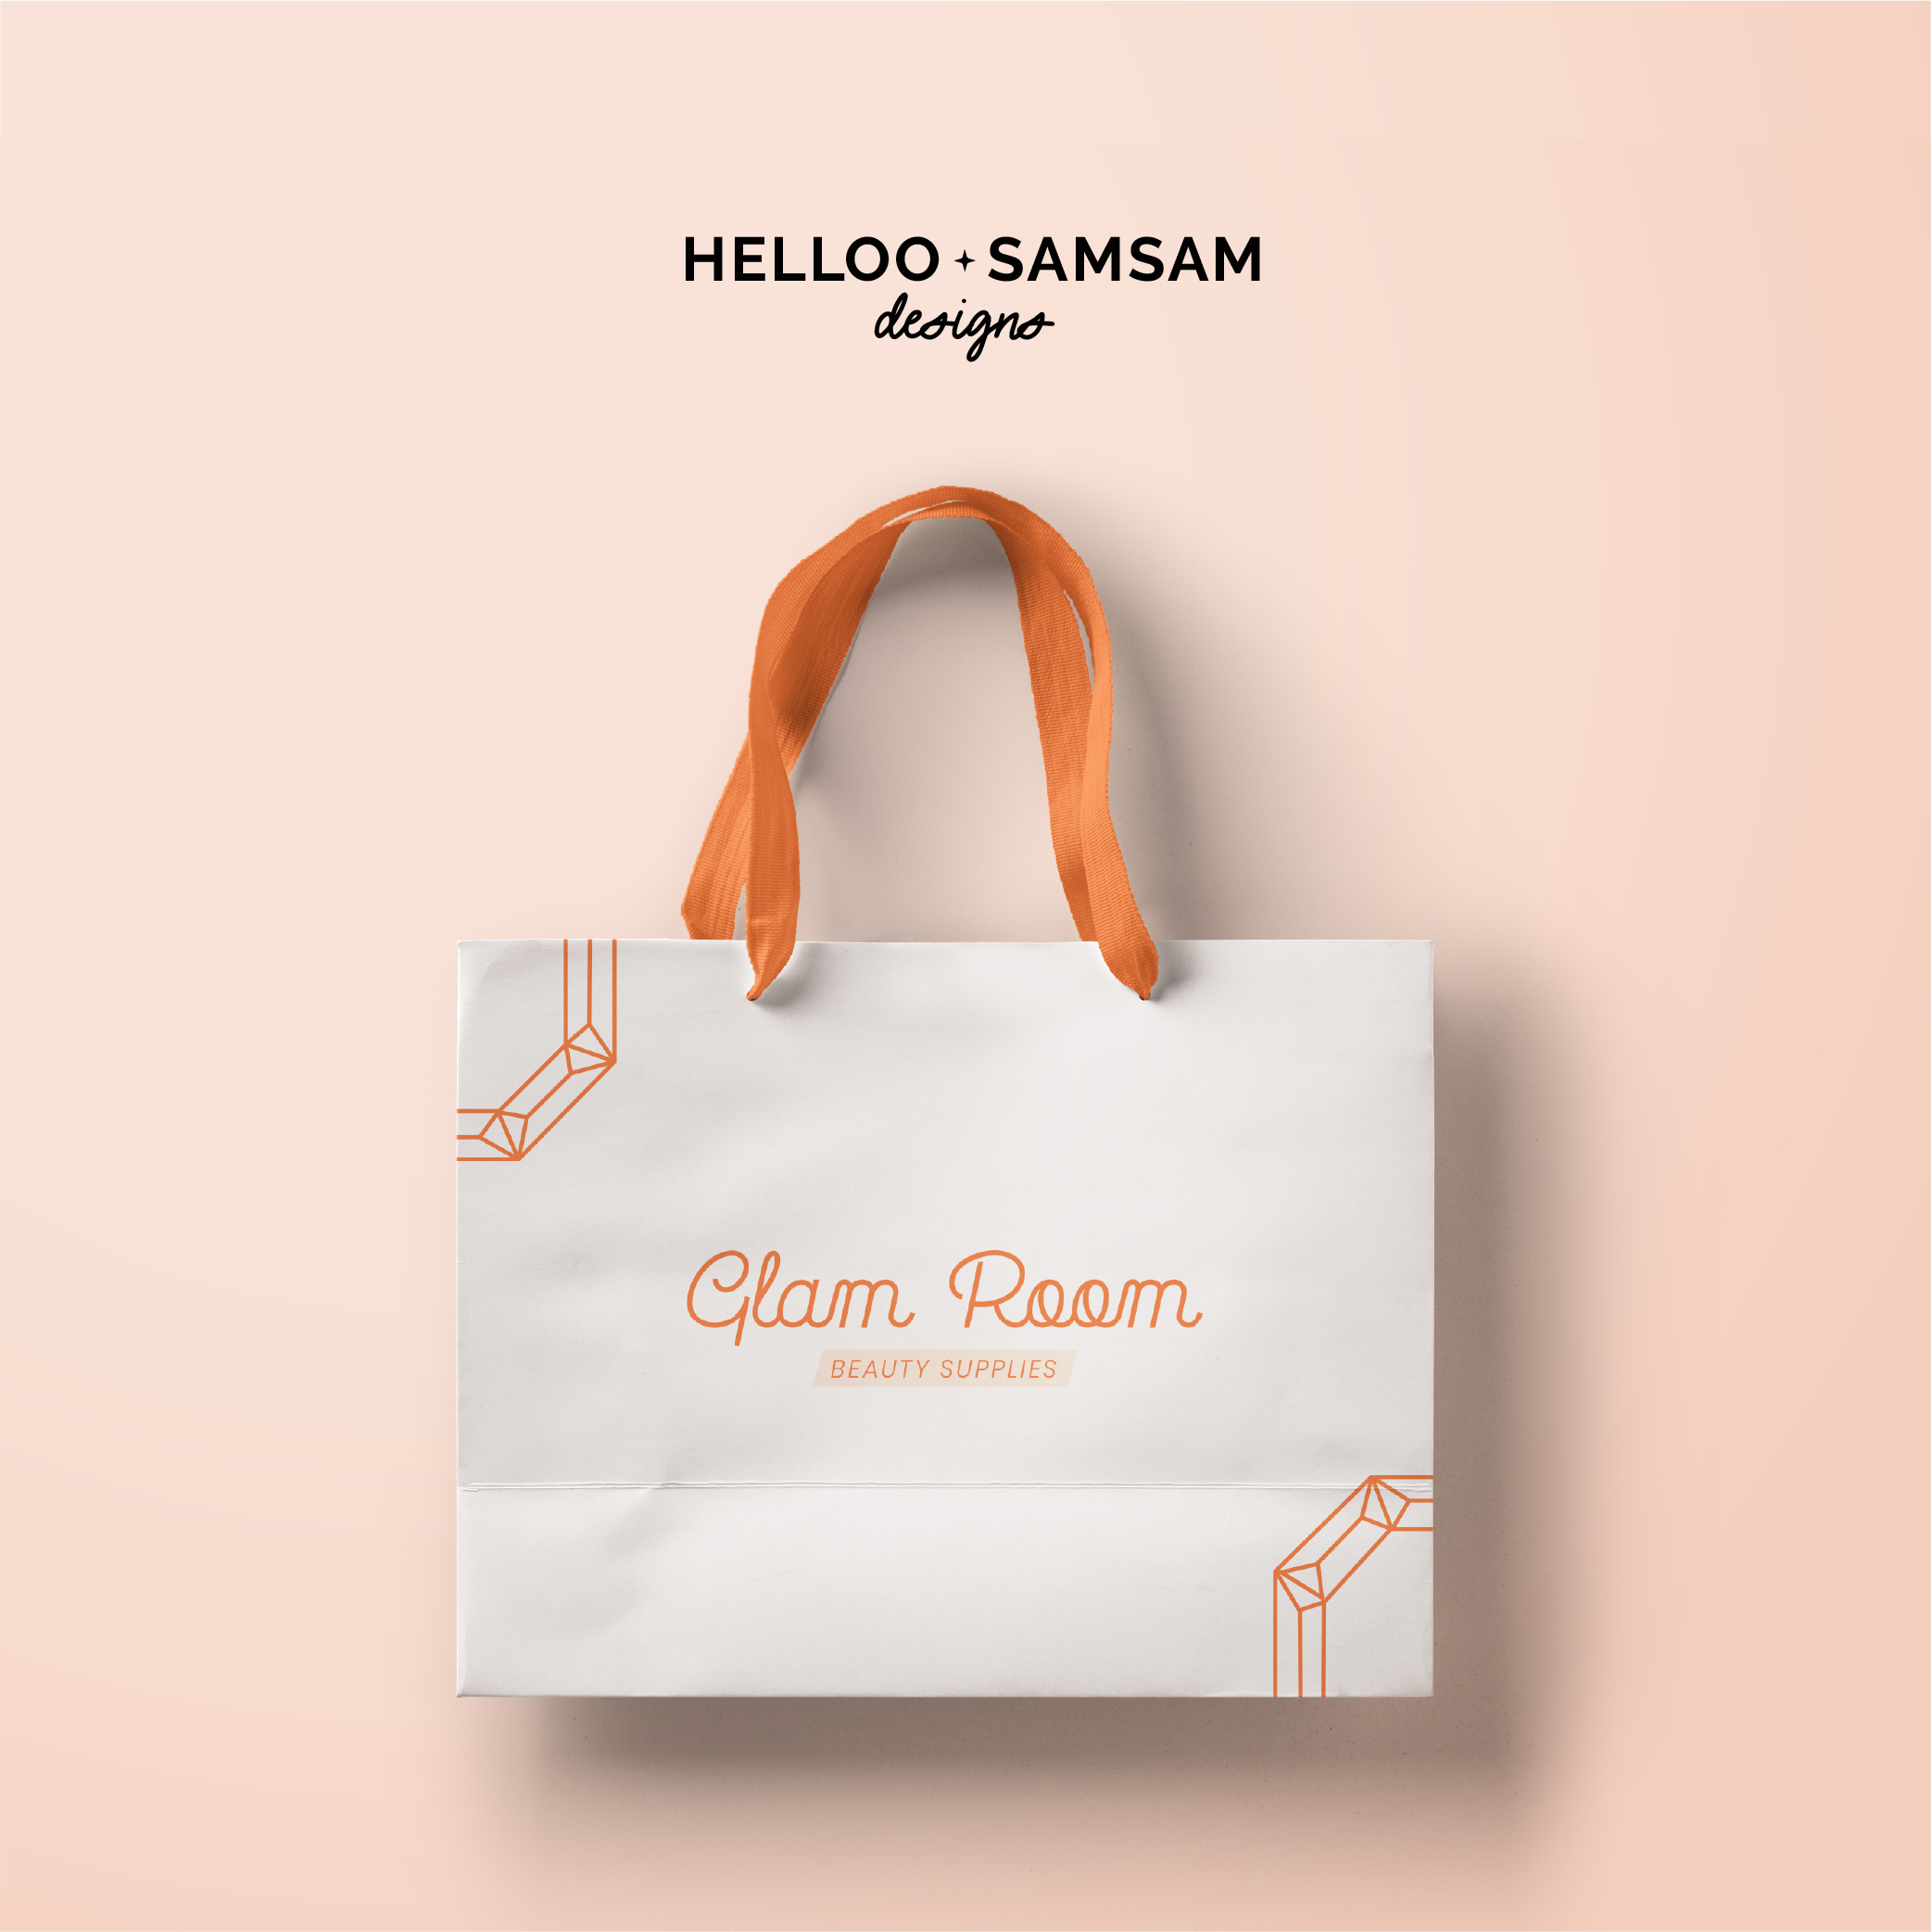 glamroom_branding_websiteportfolio_helloosamsamdesigns-11.png